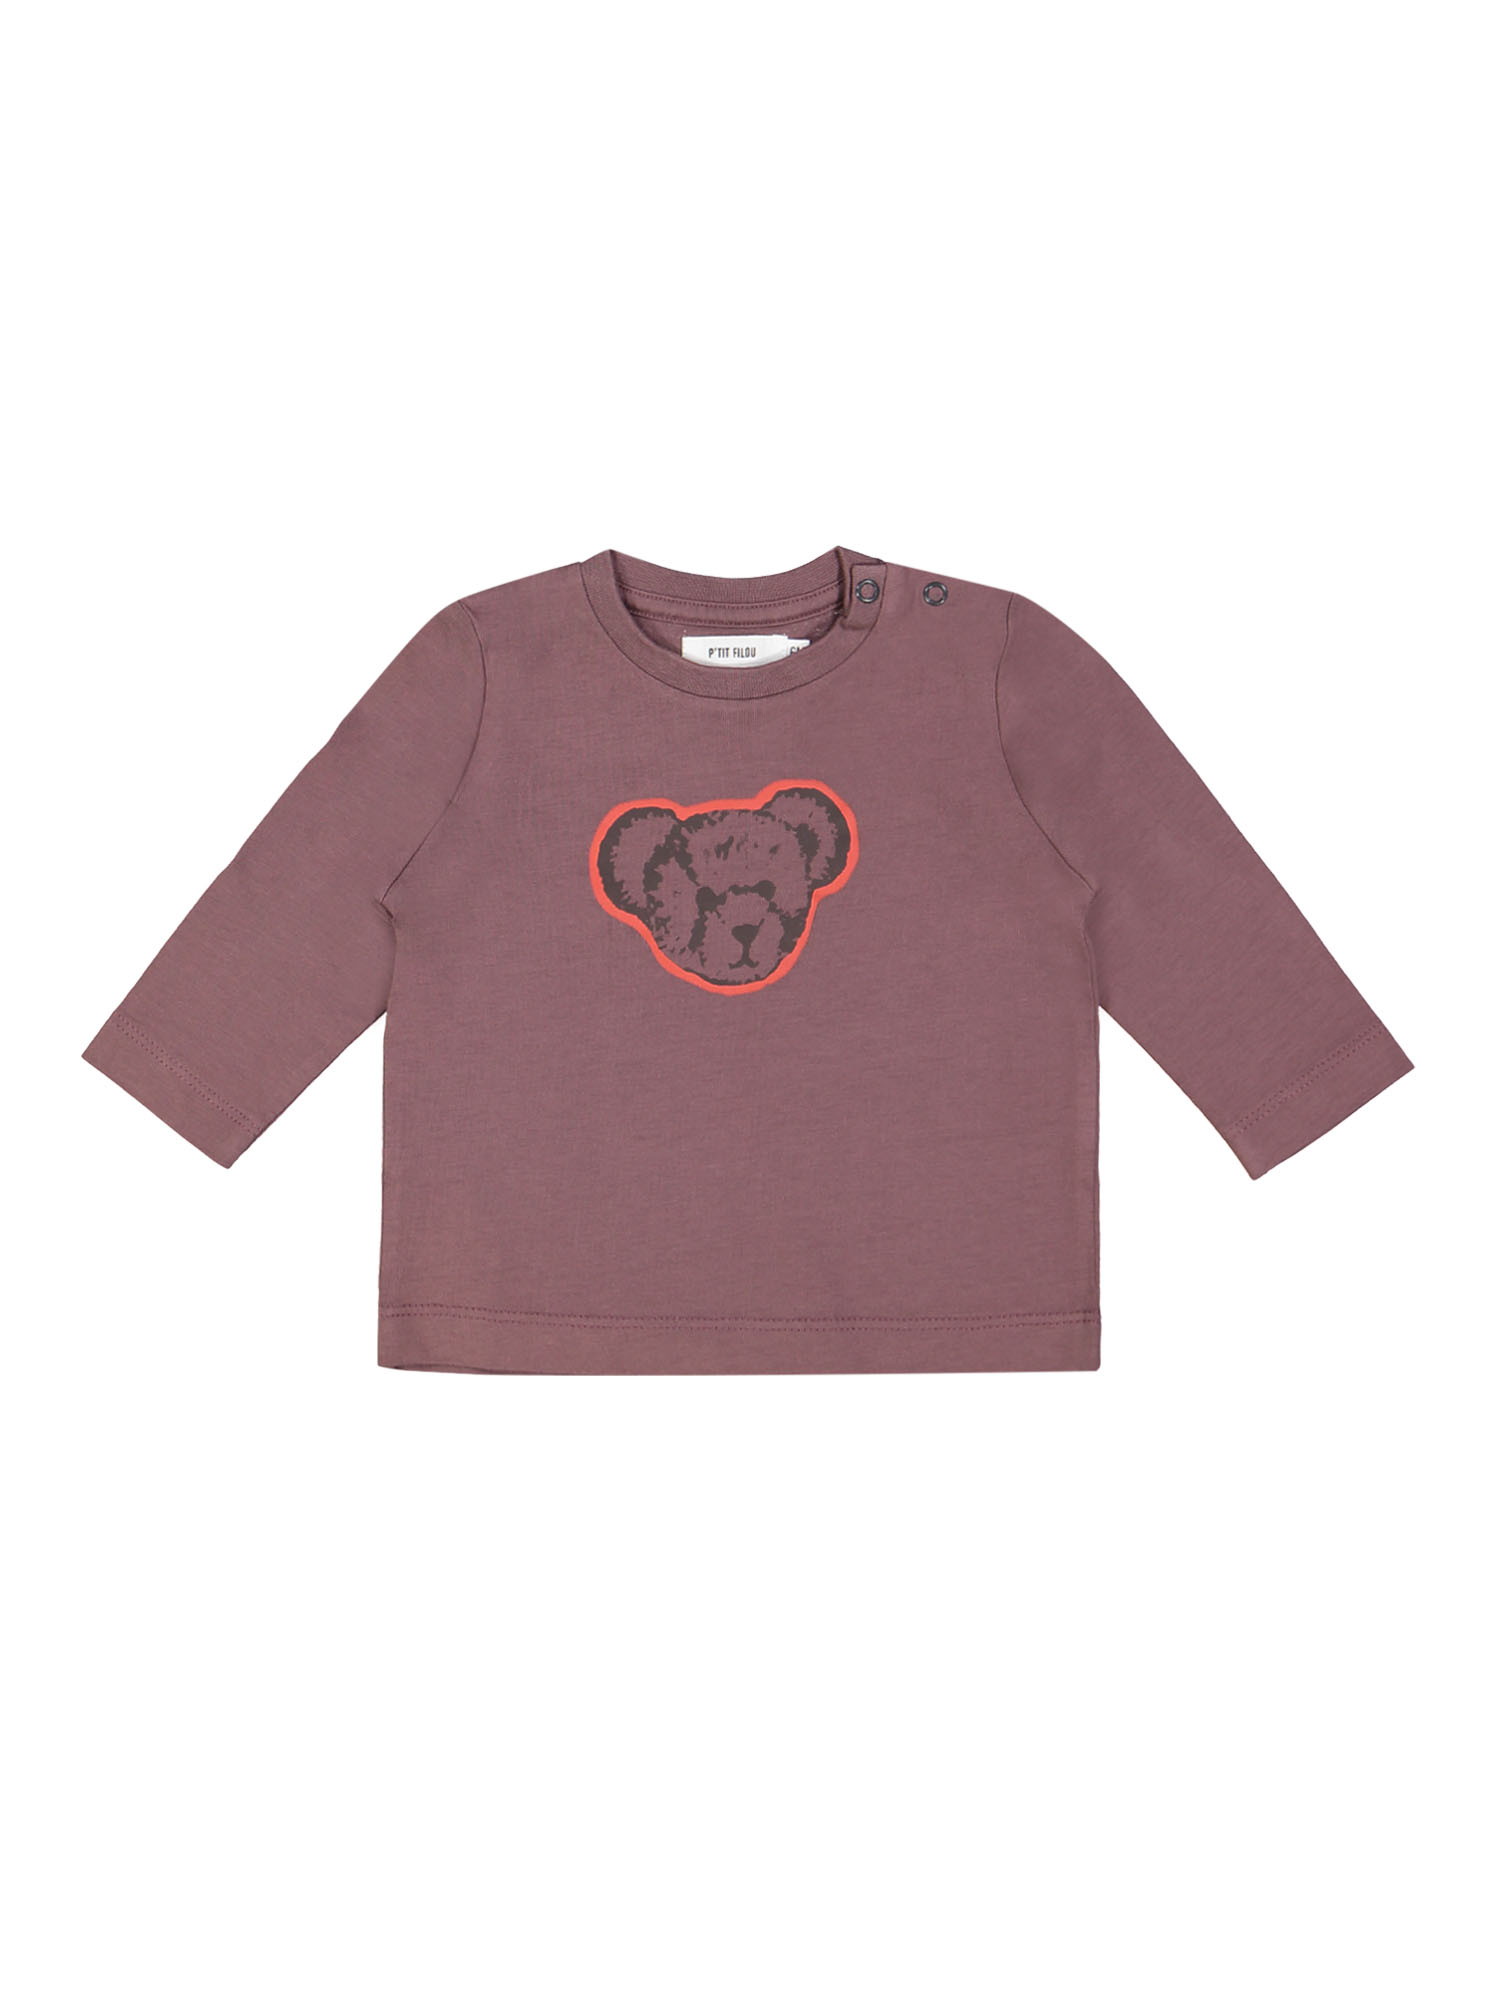 T-shirt teddy bear aubergine 12m